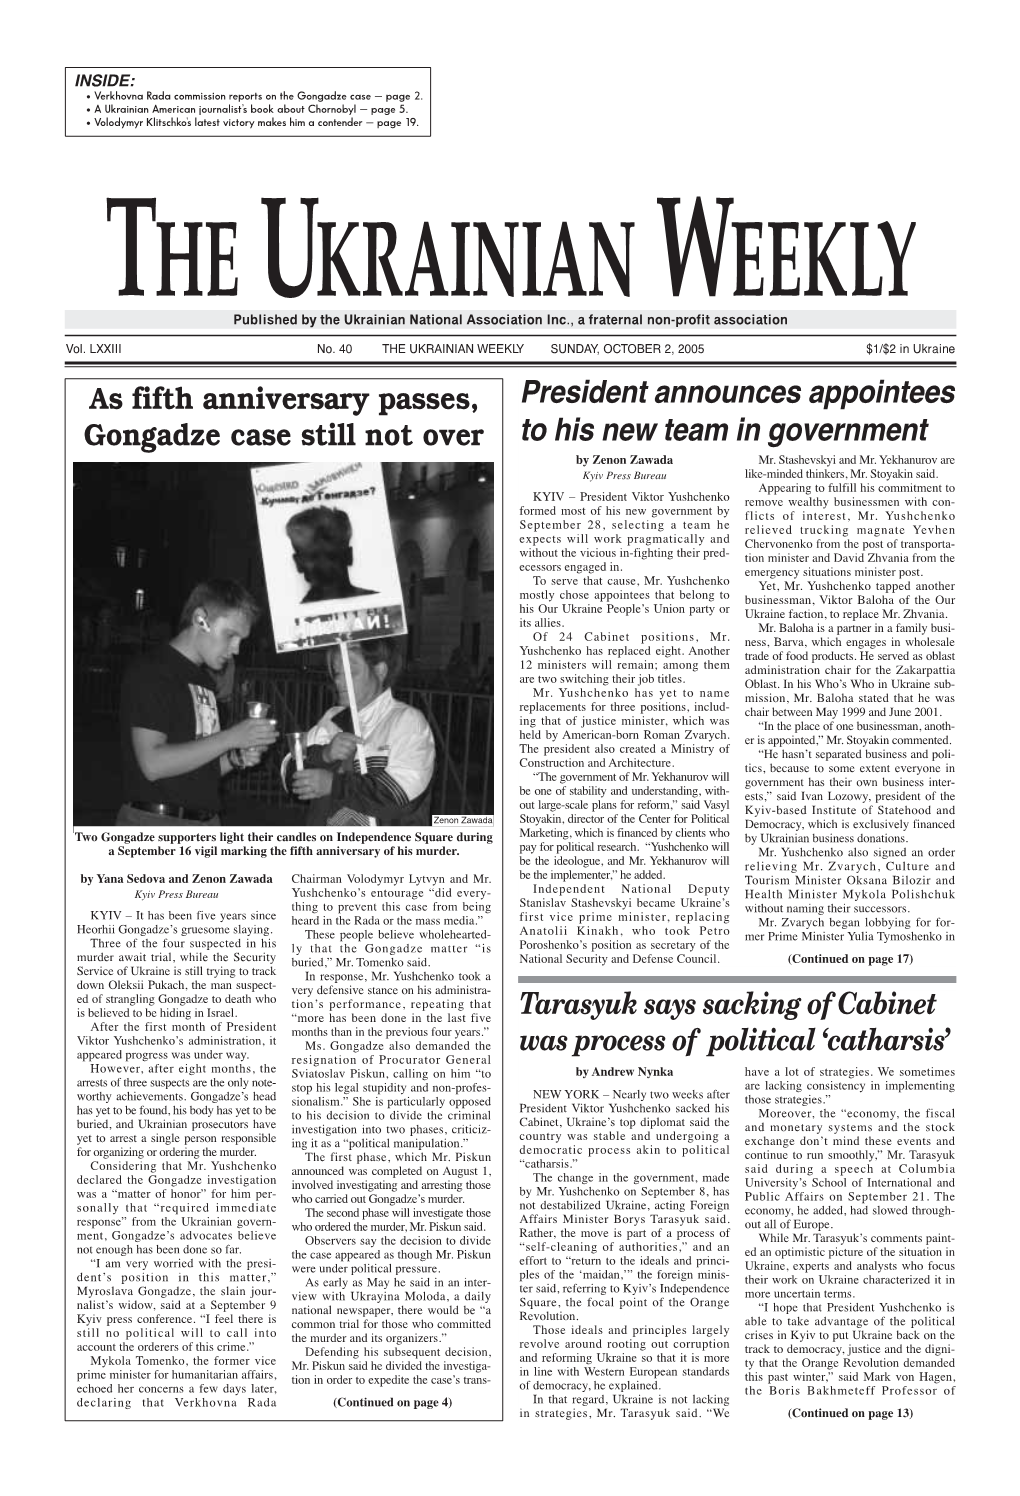 The Ukrainian Weekly 2005, No.40